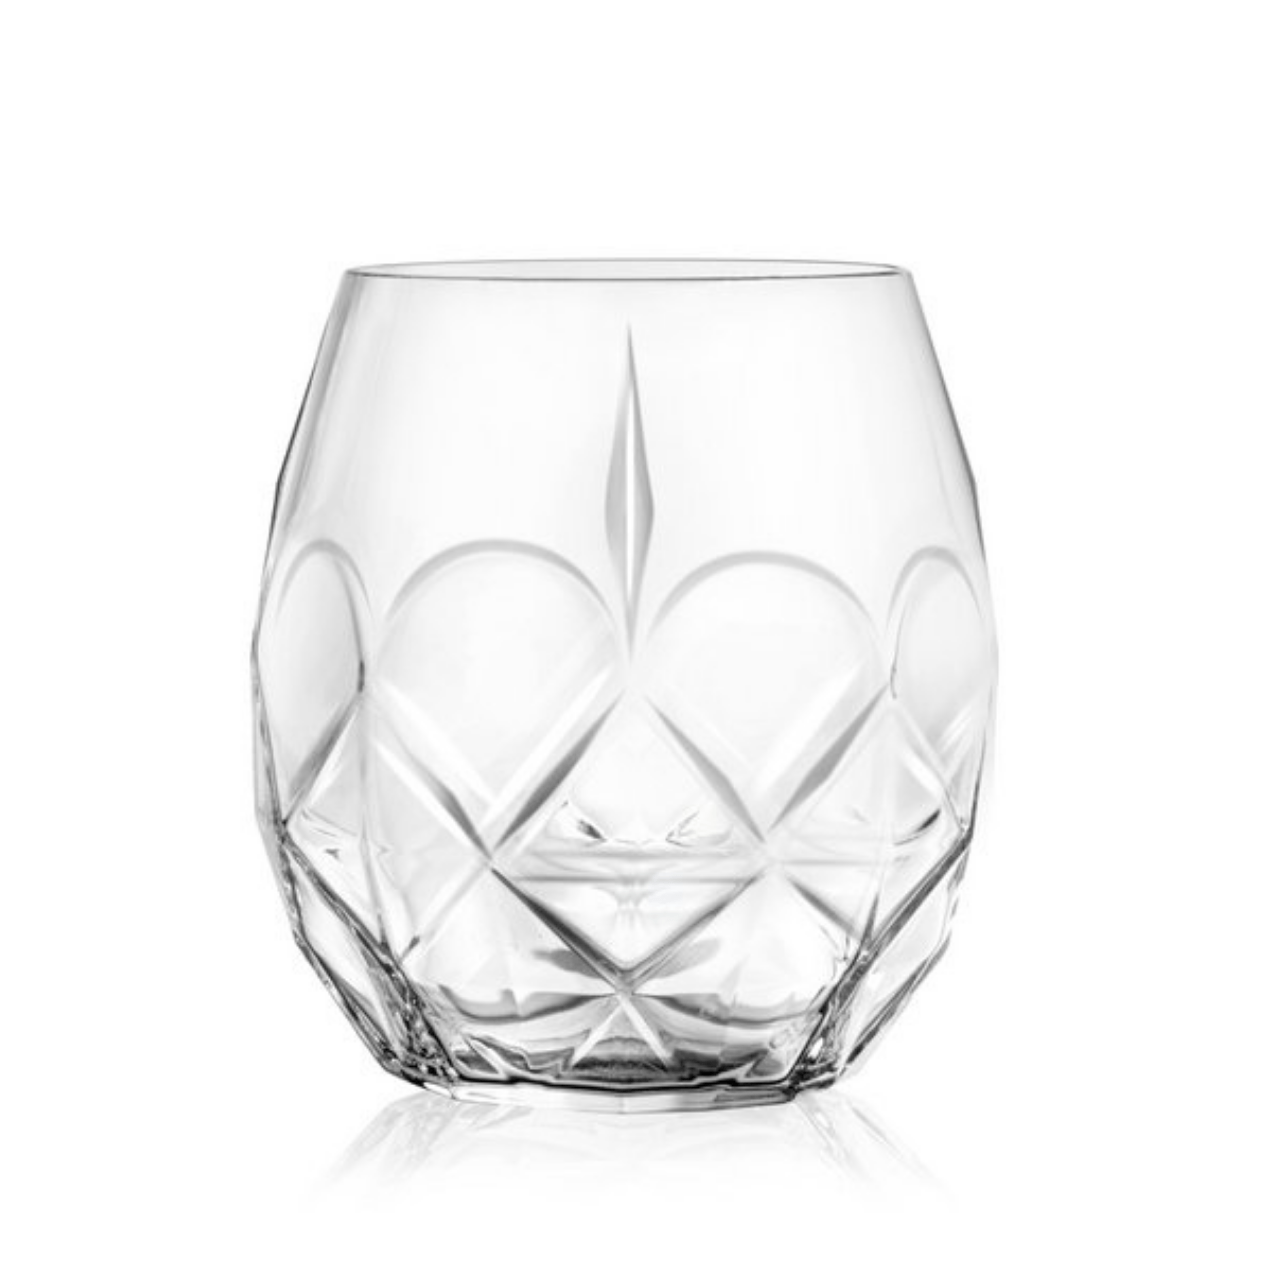 RCR - Cristalleria Italiana Glazen Glas 38cl - 6-delige set | Alkemist